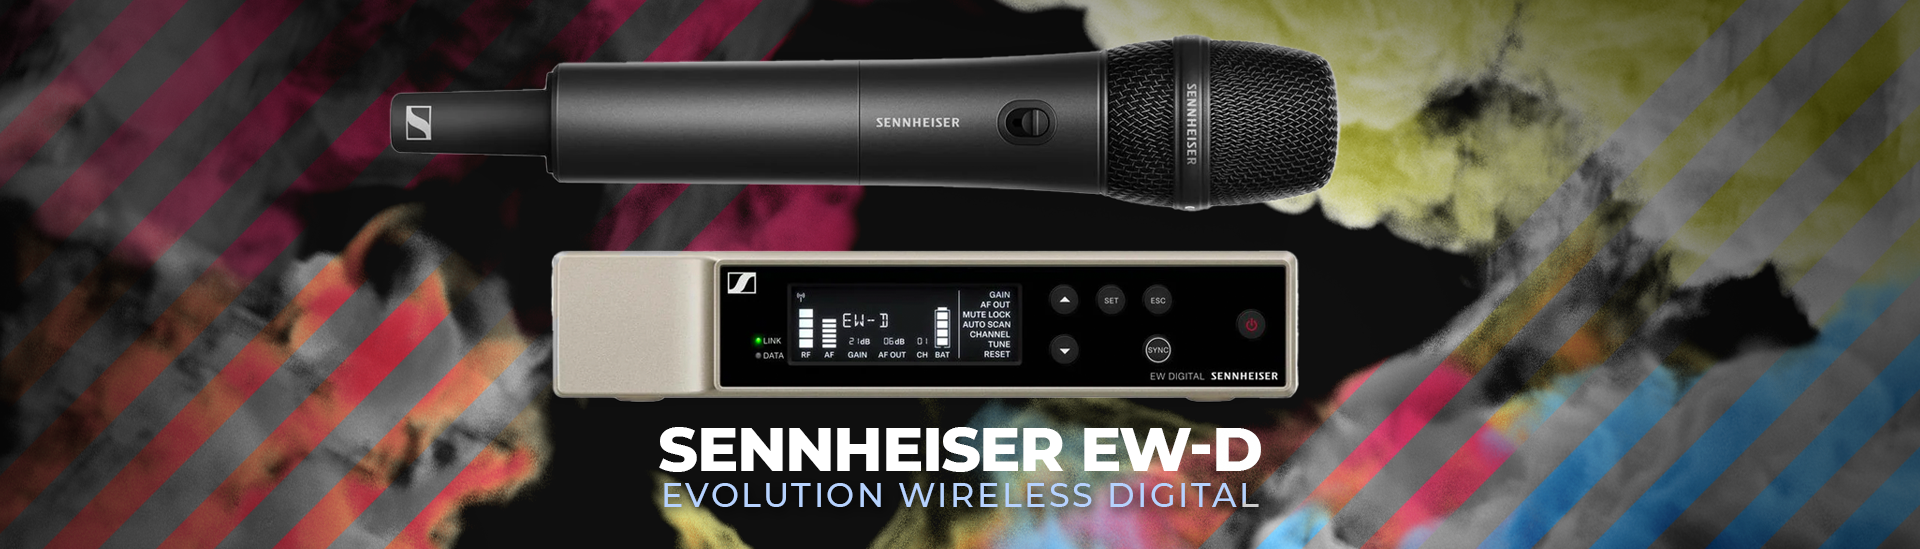 Sennheiser Evolution Wireless Digital EW-DX SK - wireless bodypack